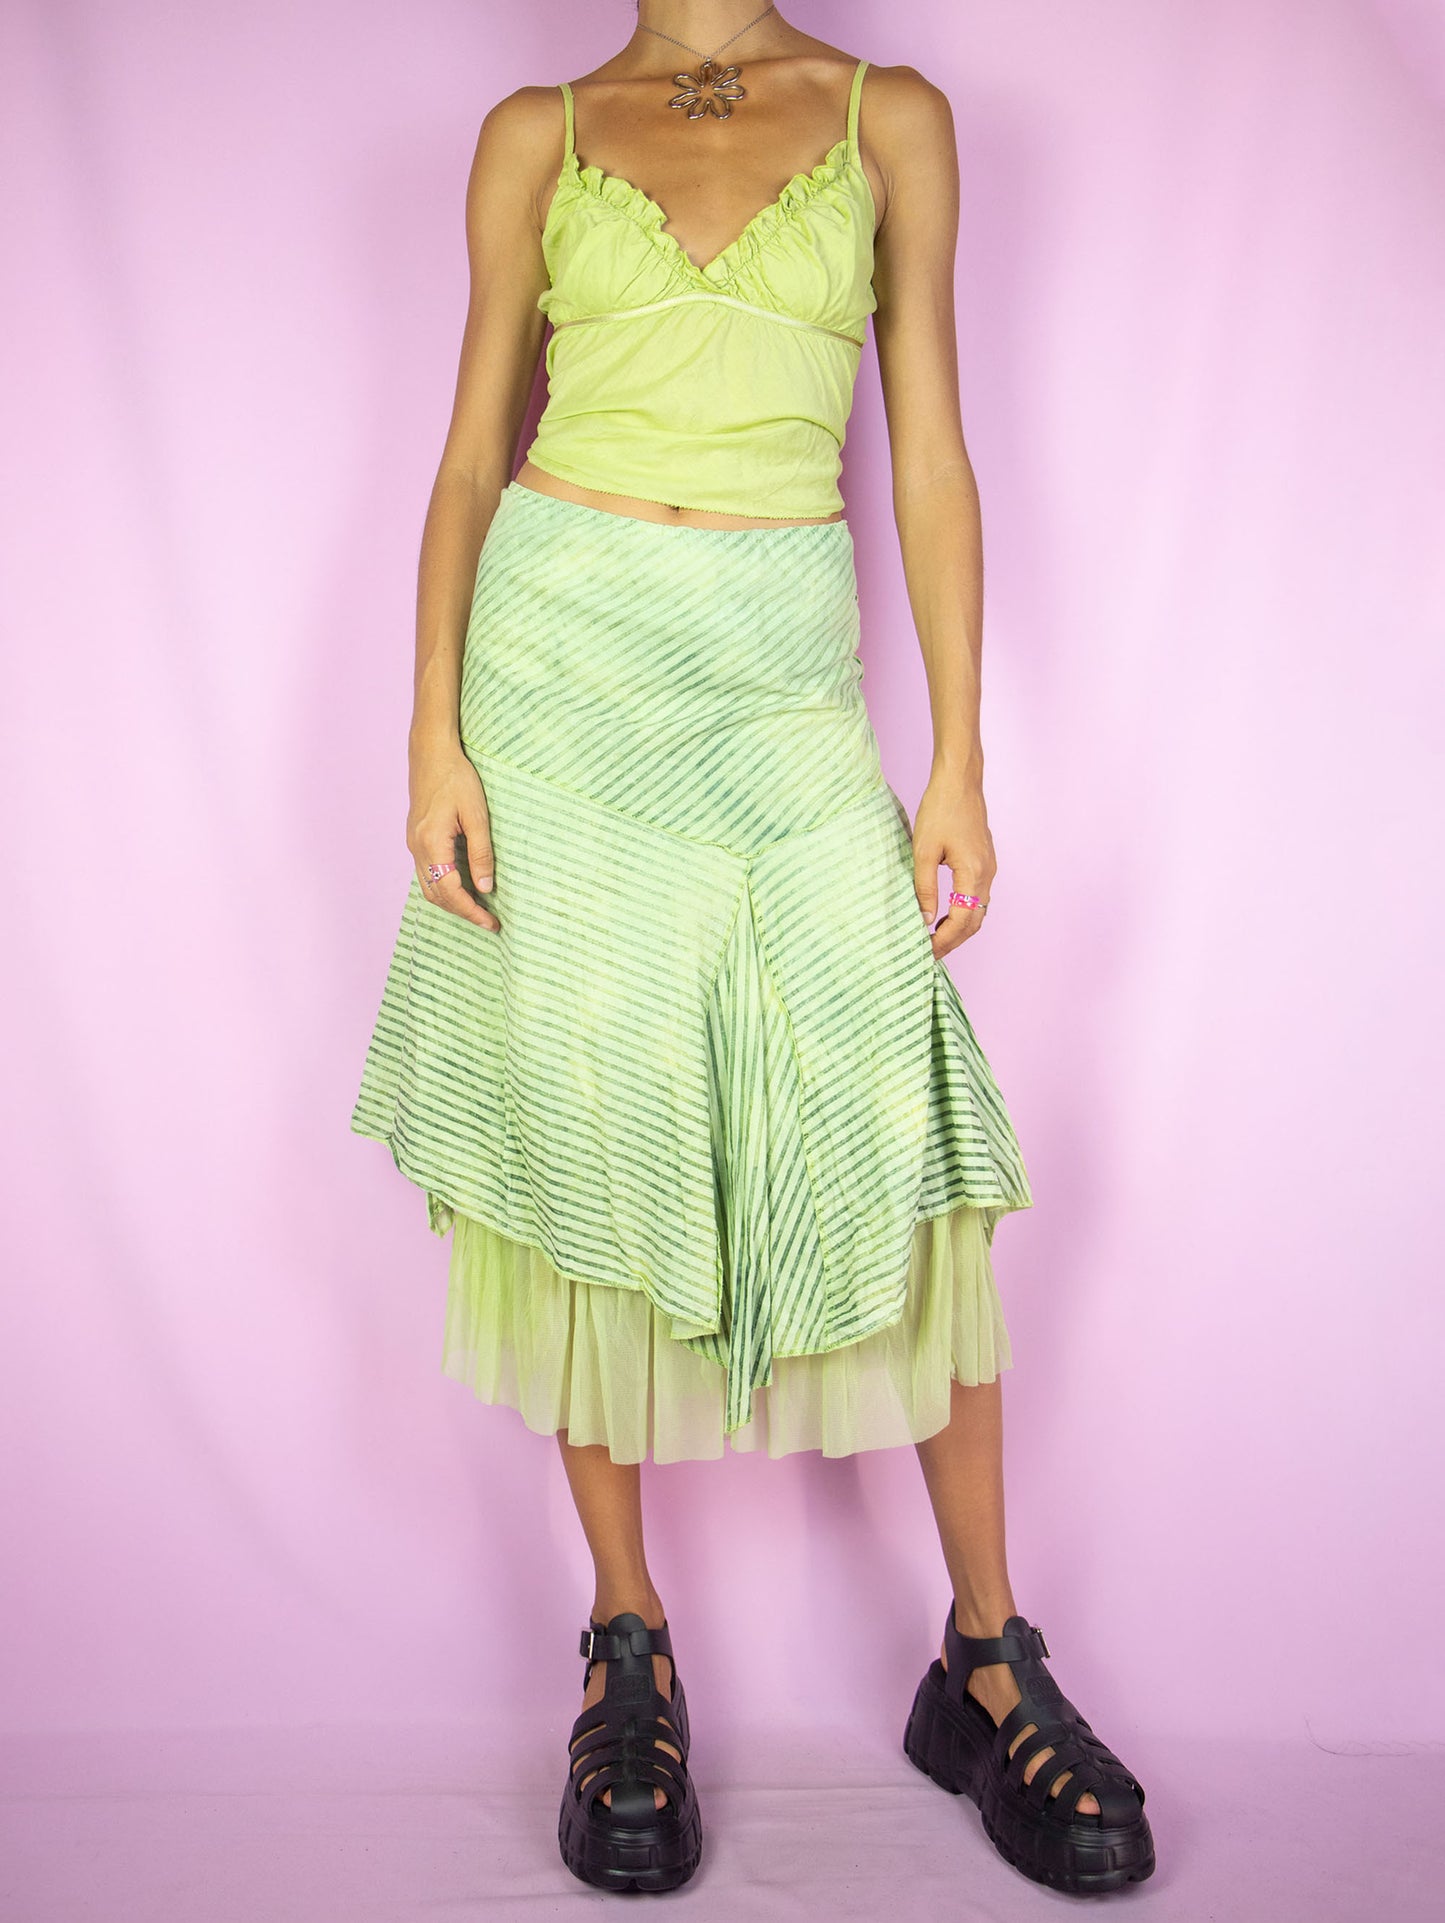 The Y2K Green Asymmetric Midi Skirt is a vintage green striped skirt with pointed asymmetric layers, semi-sheer mesh hem and elastic waist. Cyber fairy grunge 2000s boho pixie midi skirt.